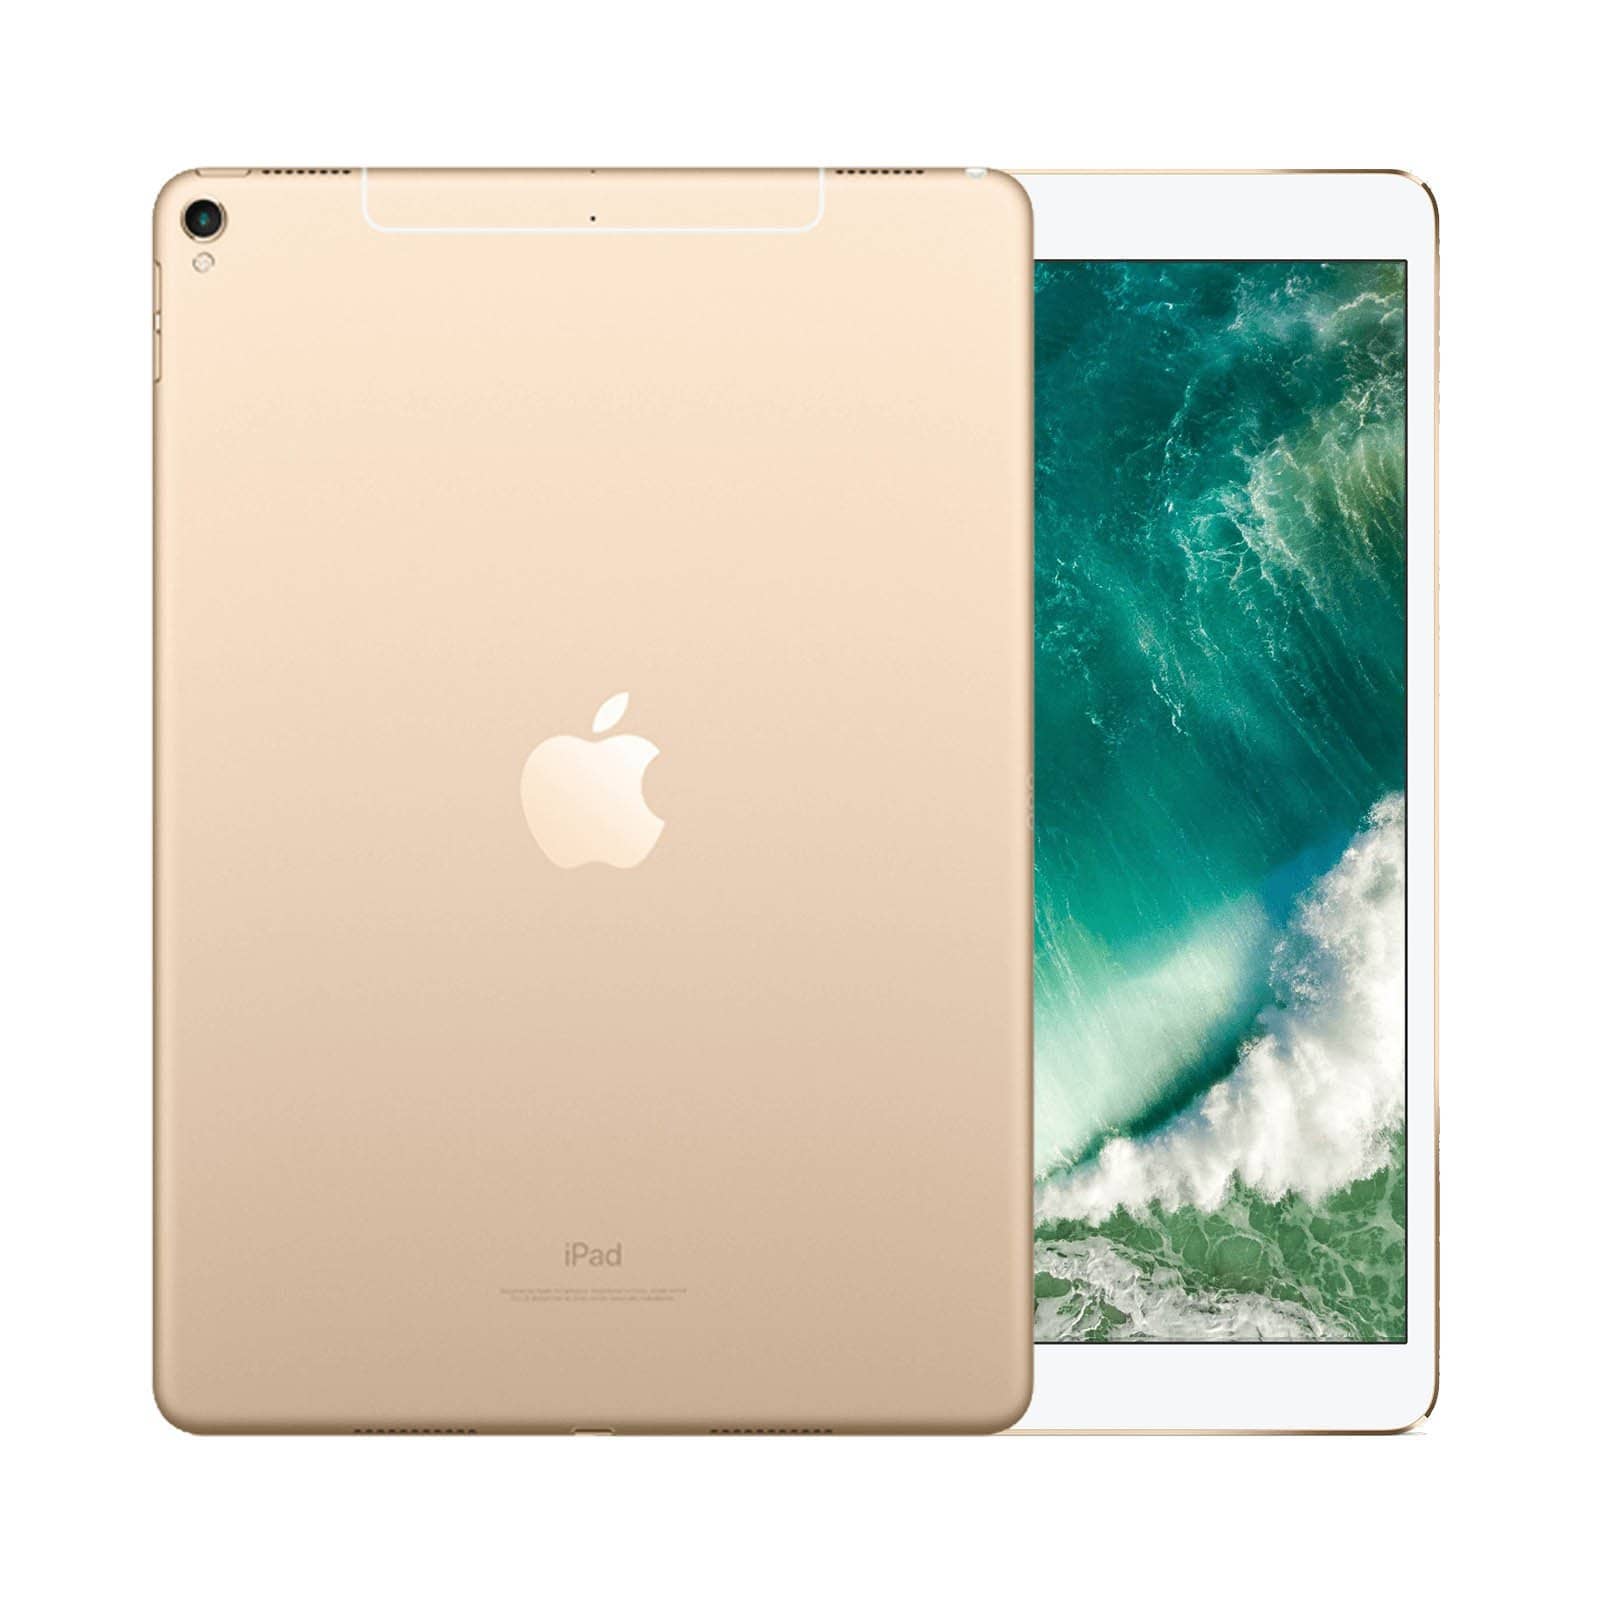 iPad Pro 10.5 Inch 256GB Gold Very Good - Unlocked 256GB Gold Very Good